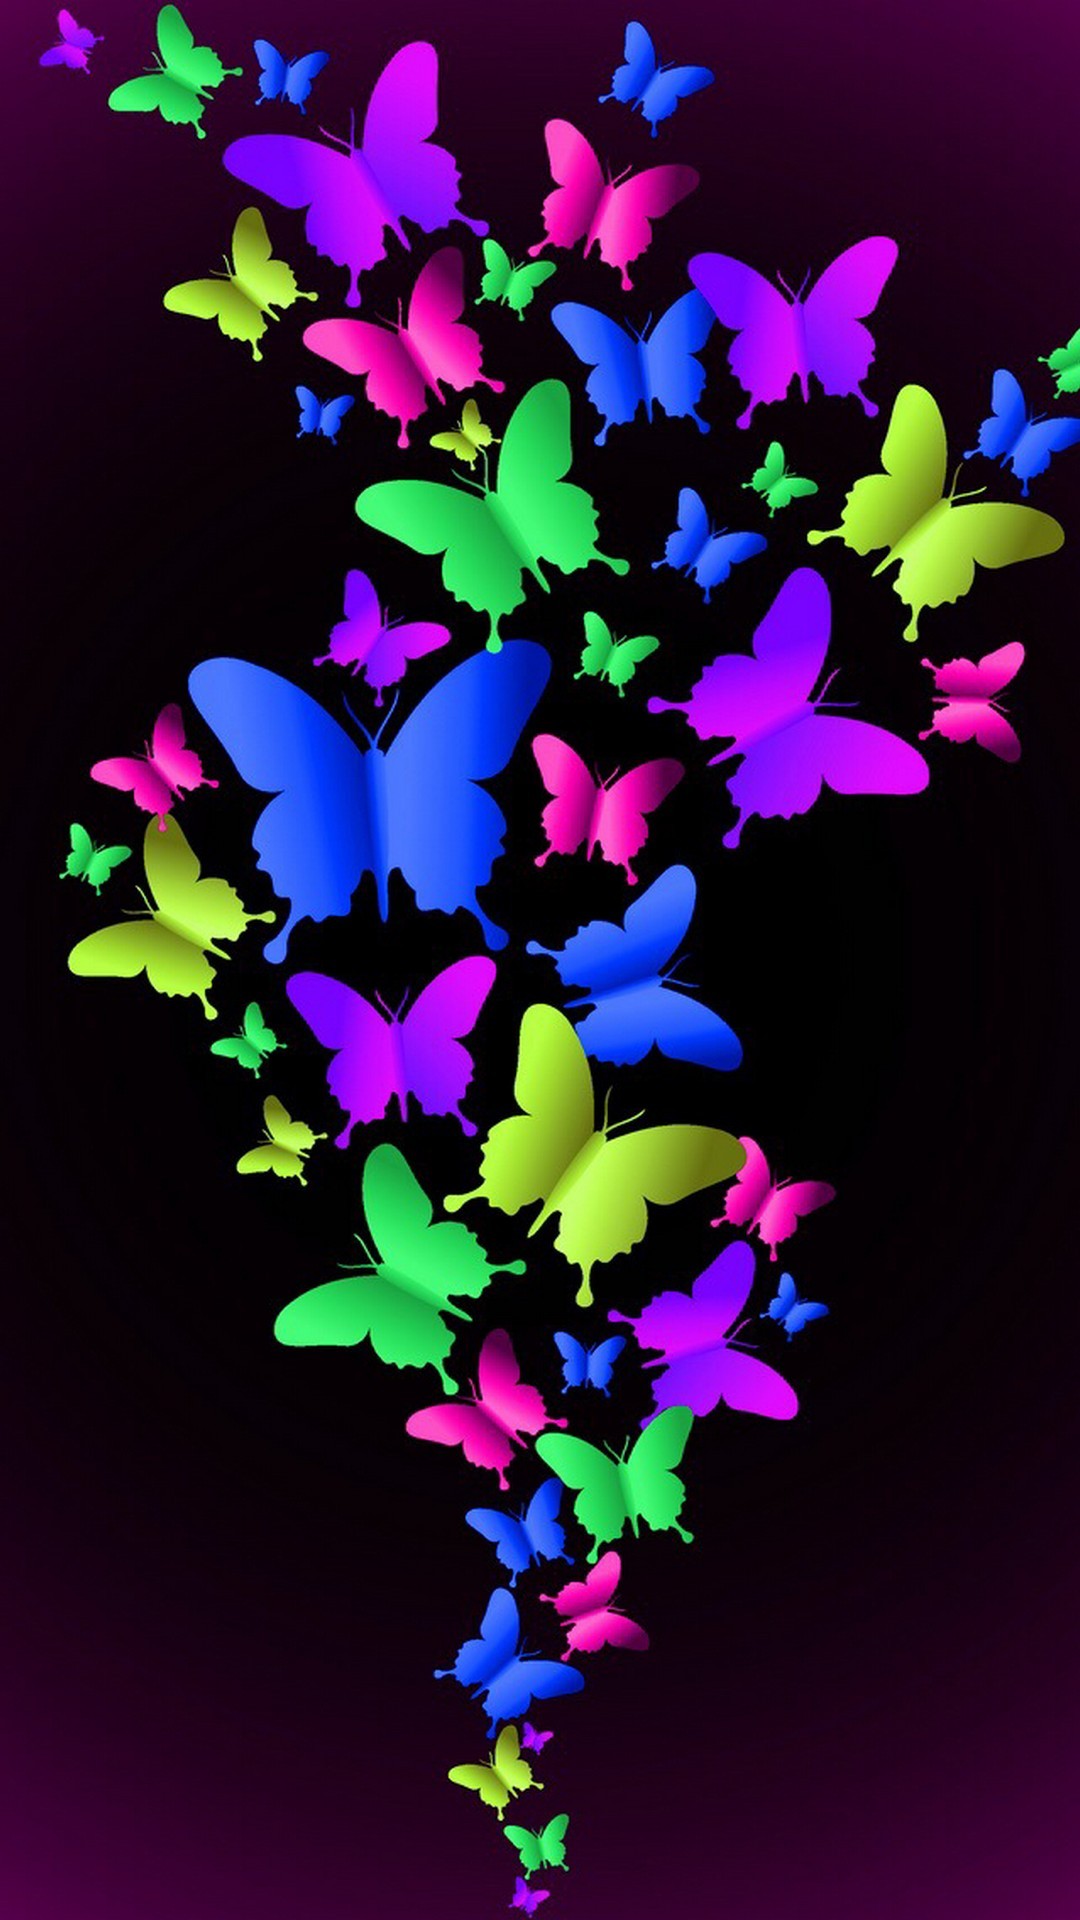 Blue Butterfly iPhone Wallpaper resolution 1080x1920